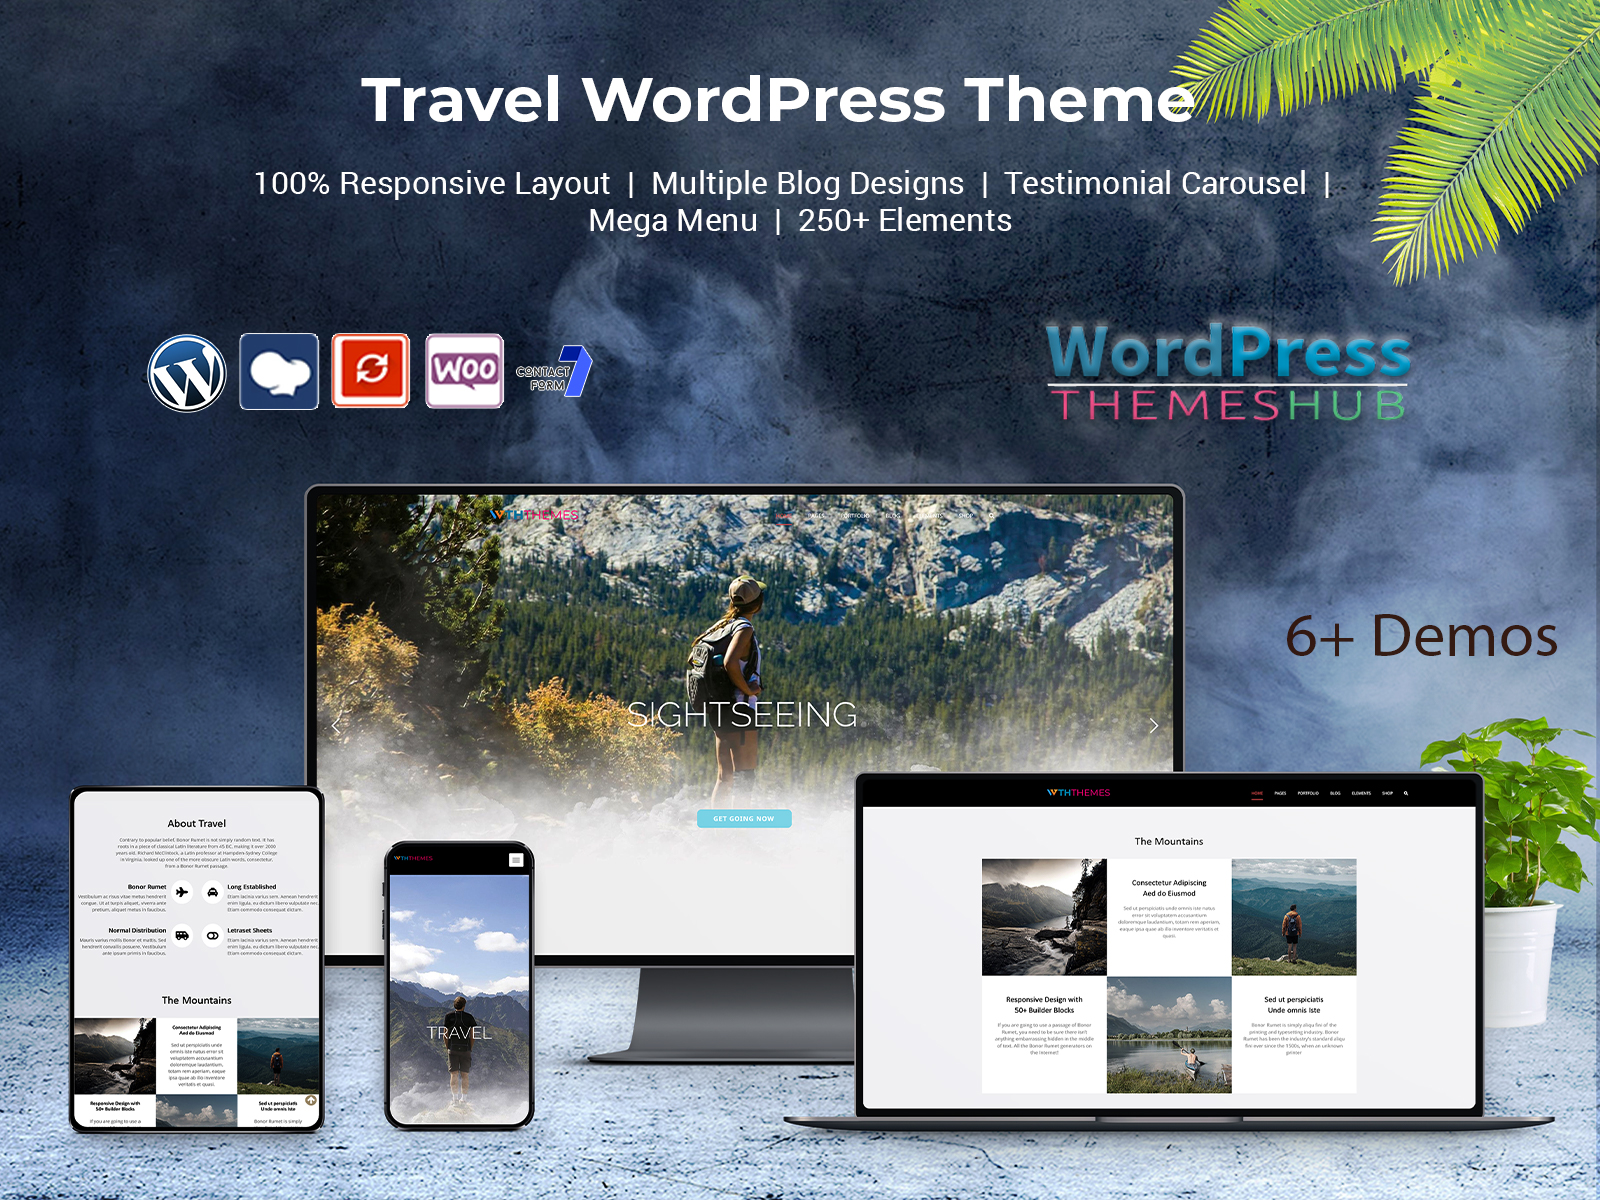 Travel WordPress Theme For Travel Agencies Websites